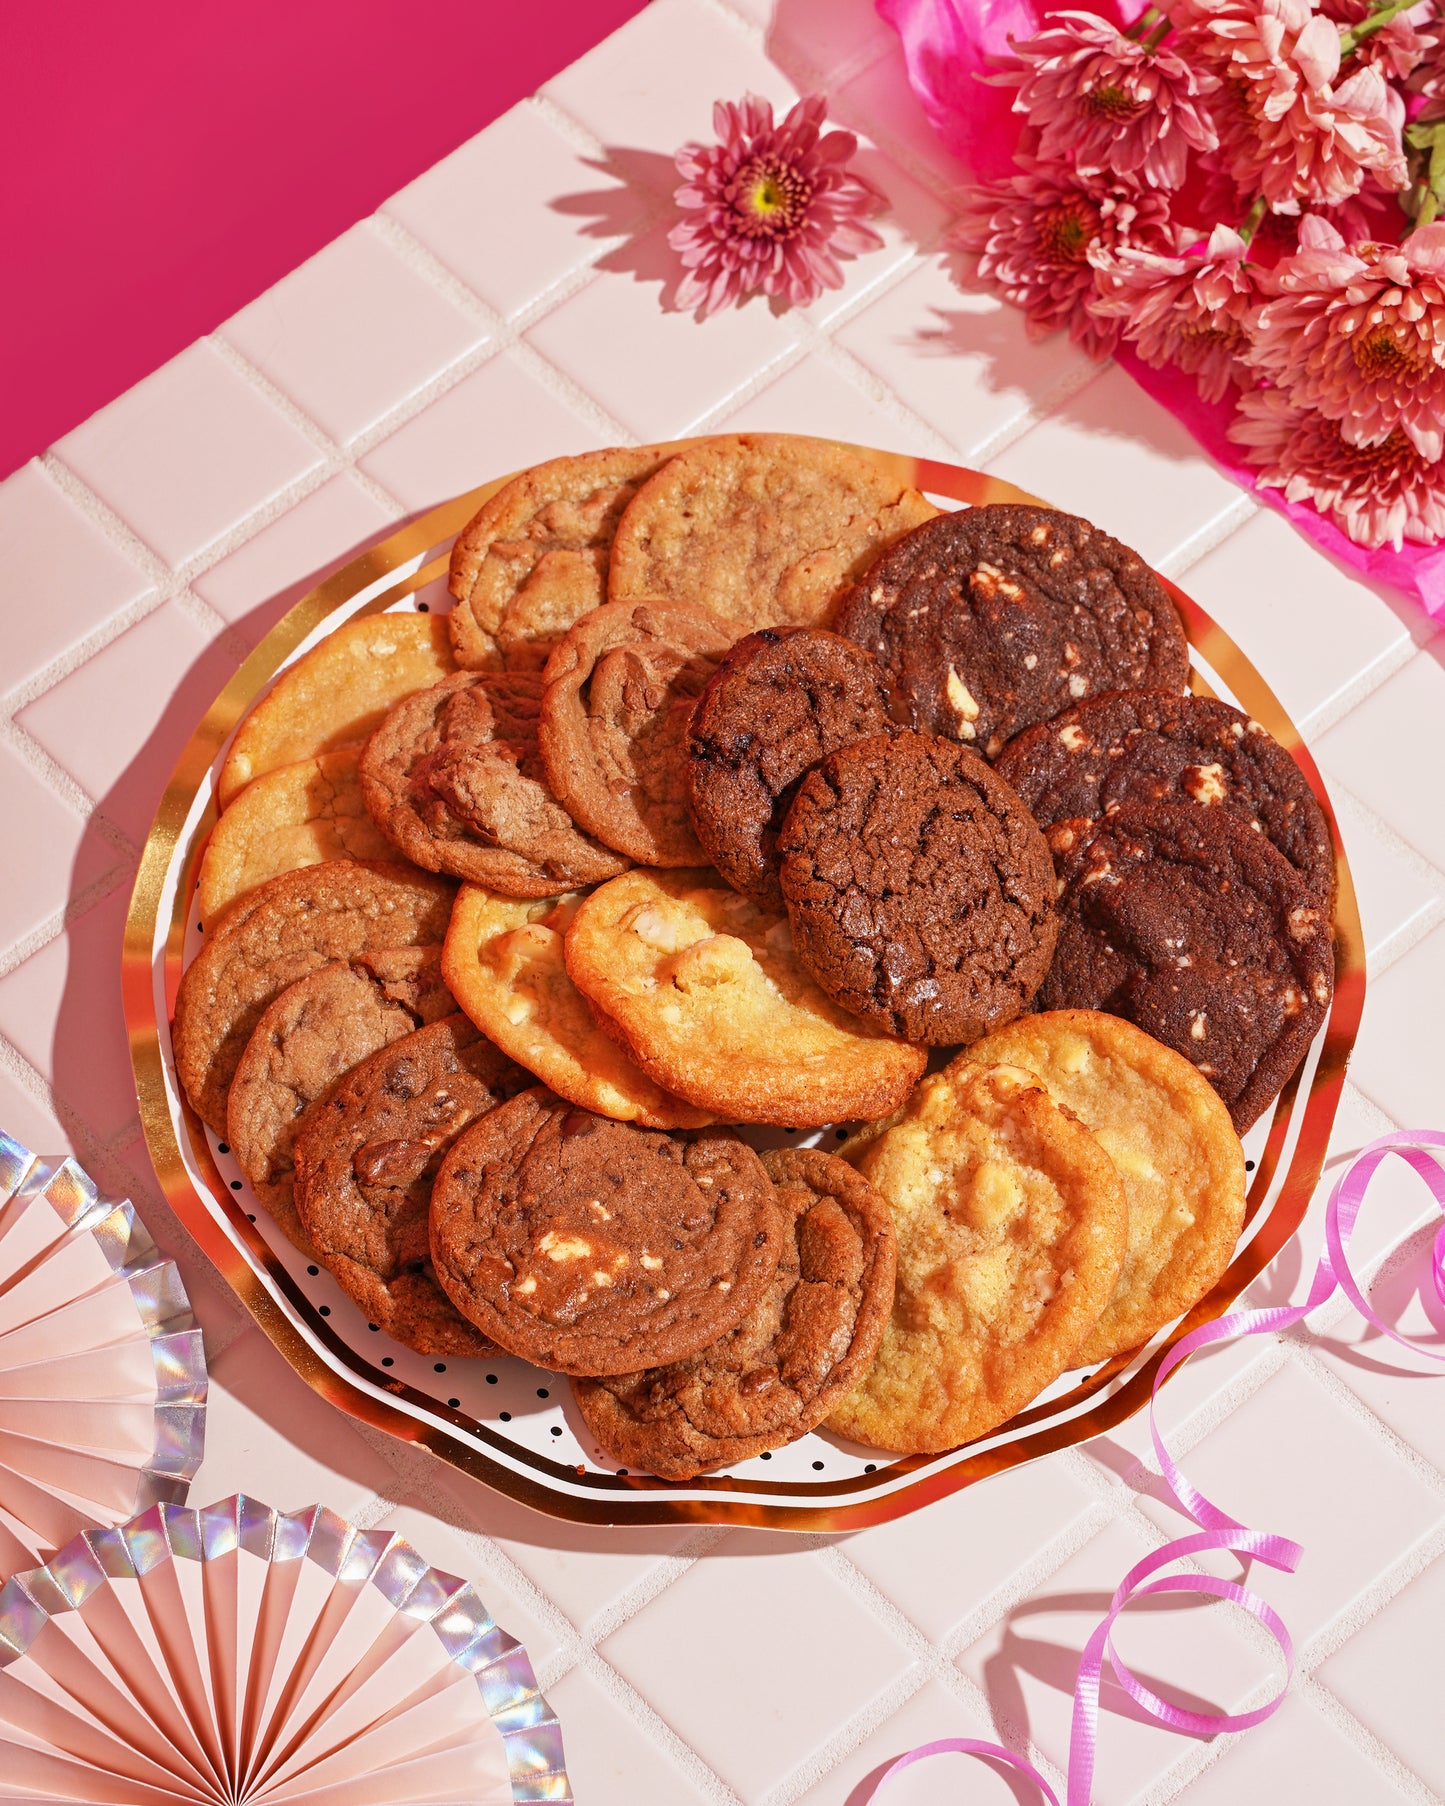 Taste Them All, Eight-Flavour Gourmet Cookies